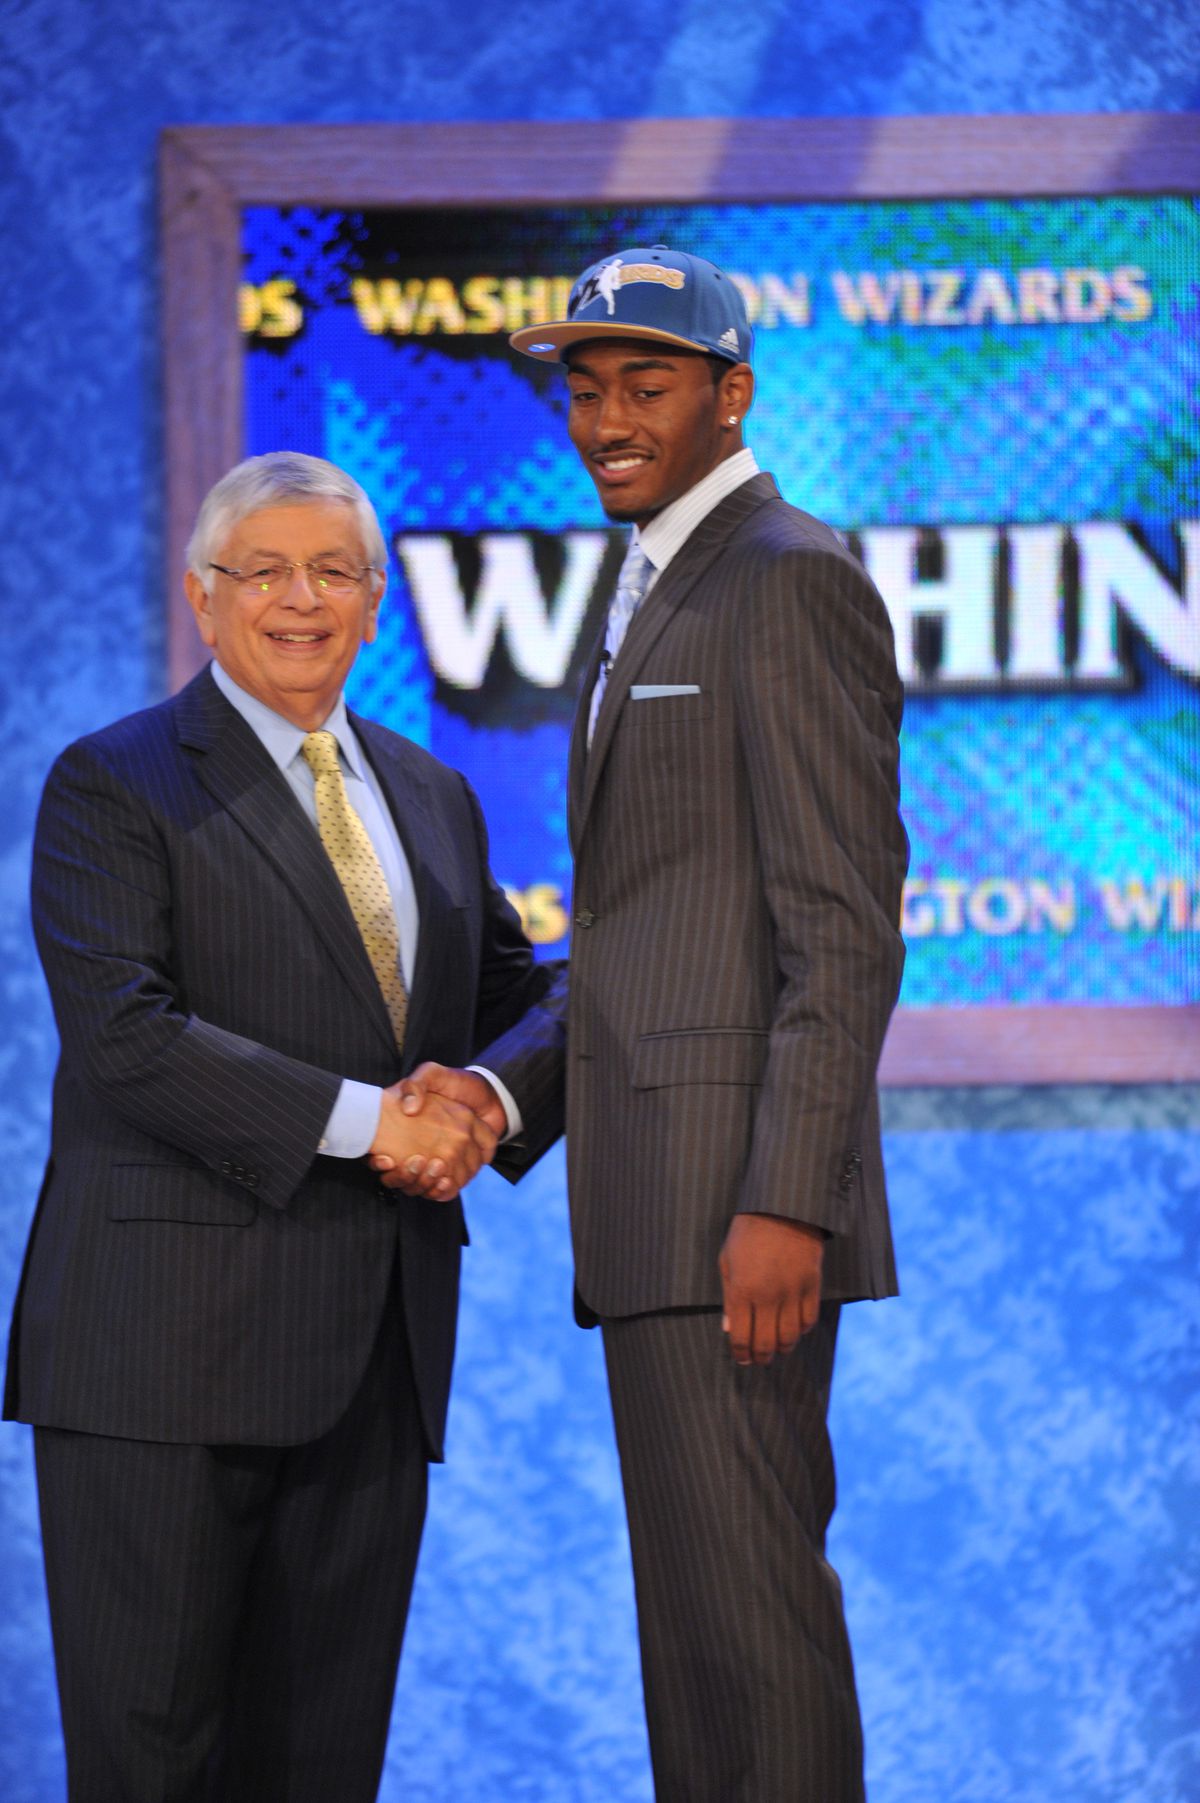 2010 NBA Draft